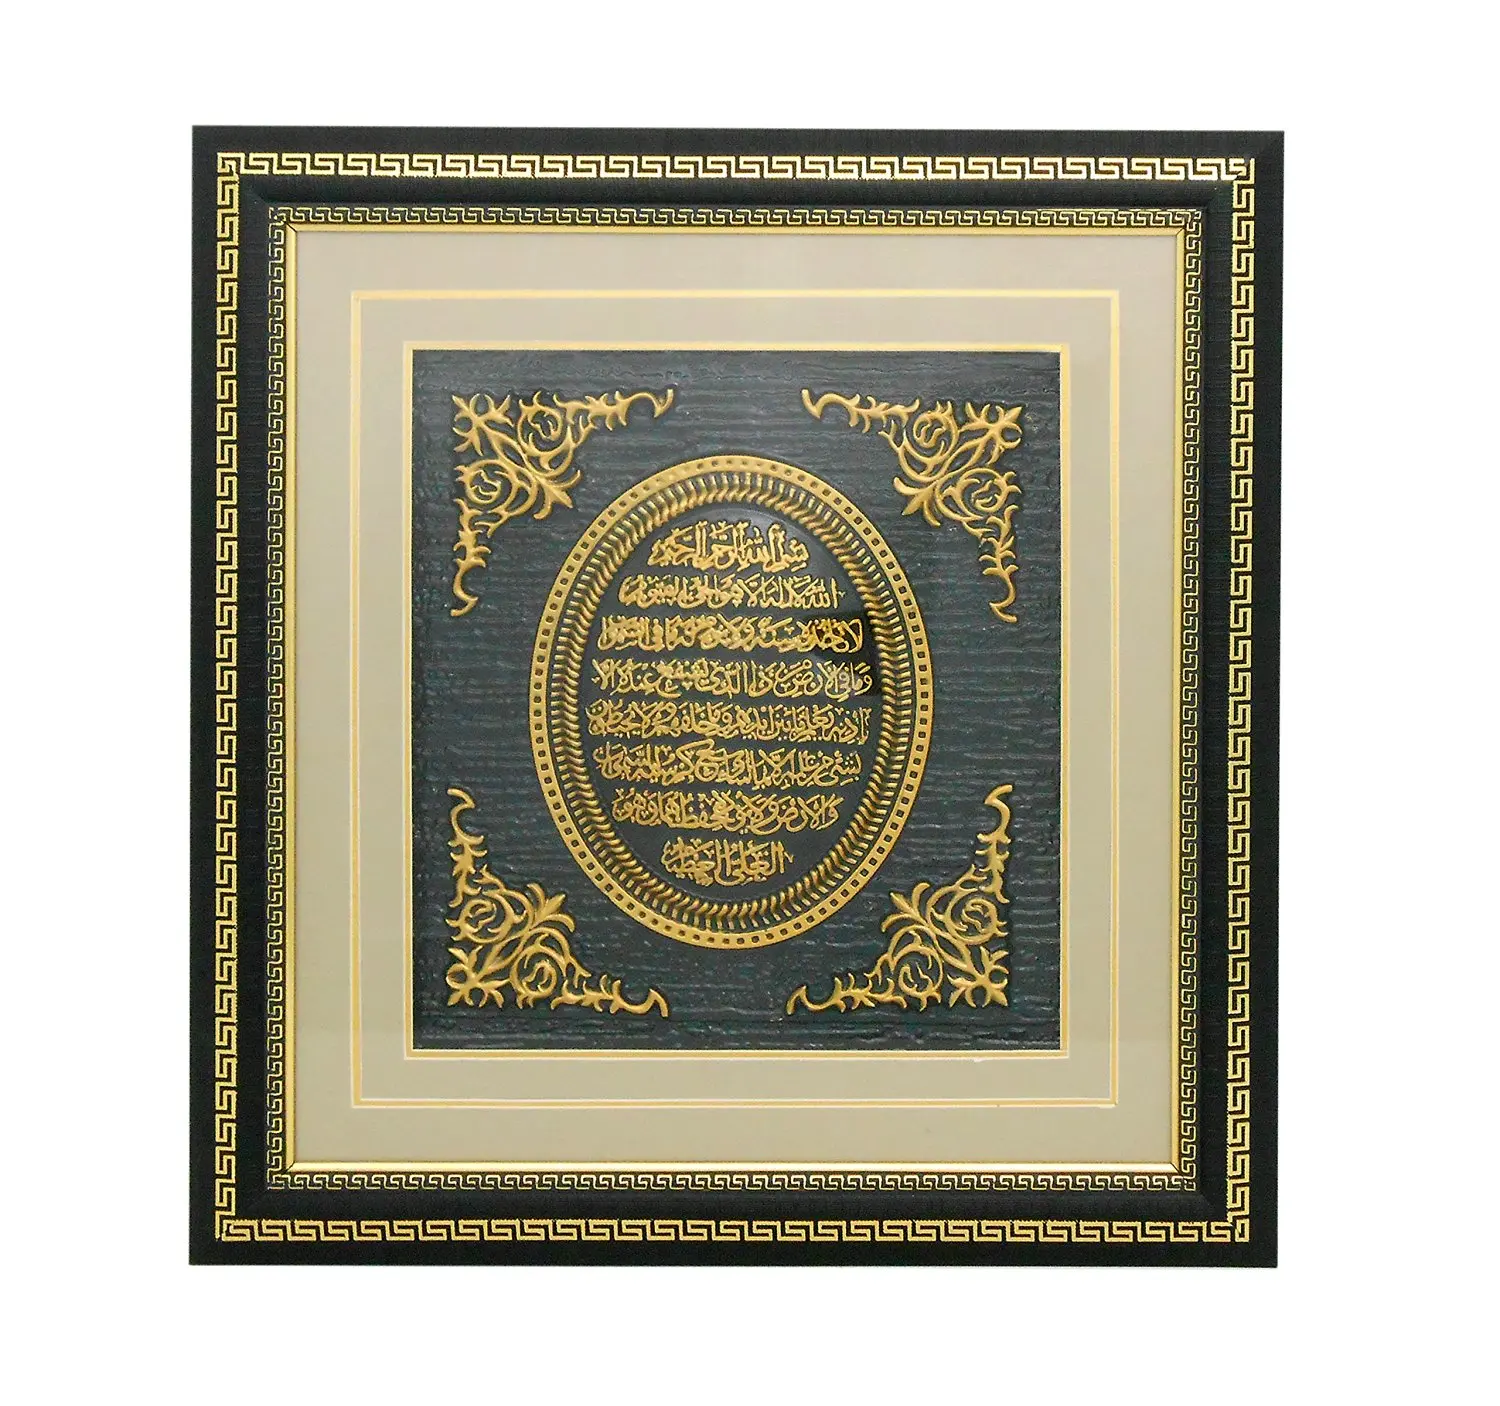 Buy Ayat Al Kursi Islamic Wall Hanging Ornate Black And Gold